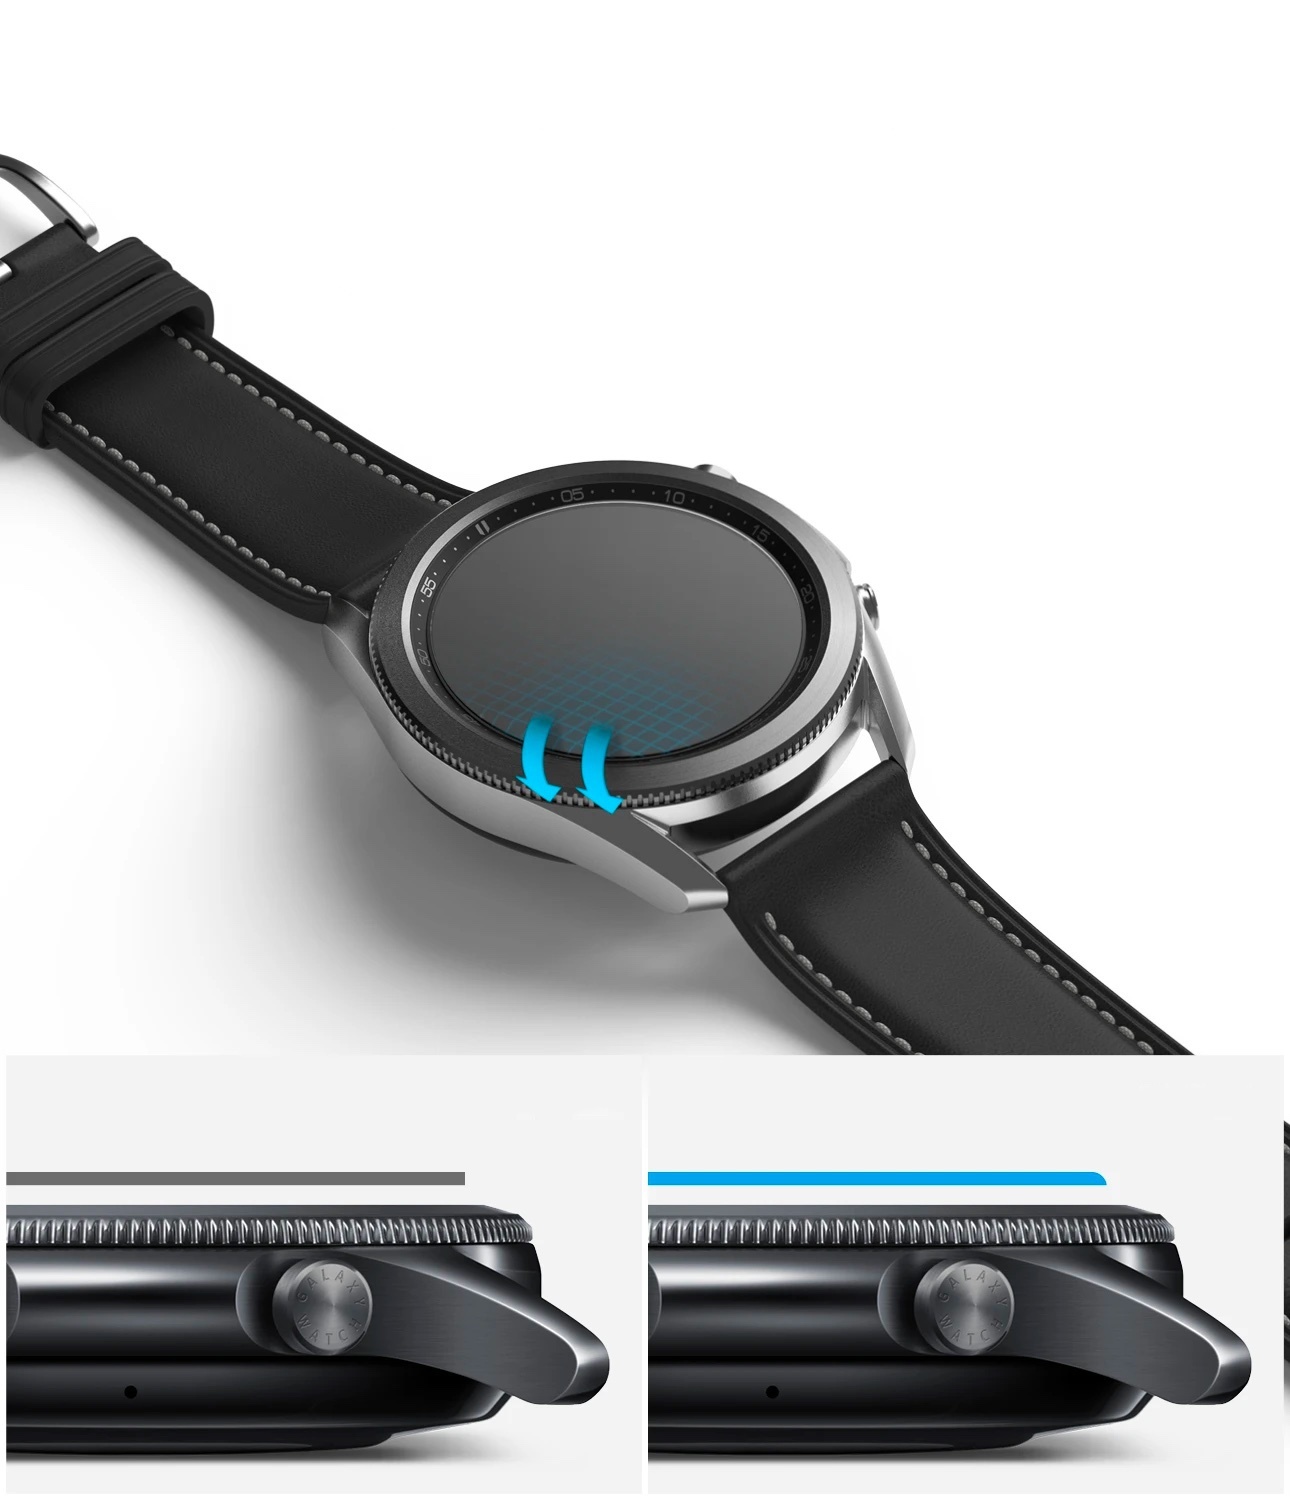 Ringke ID Glass Samsung Galaxy Watch 3 45mm [4 PACK]